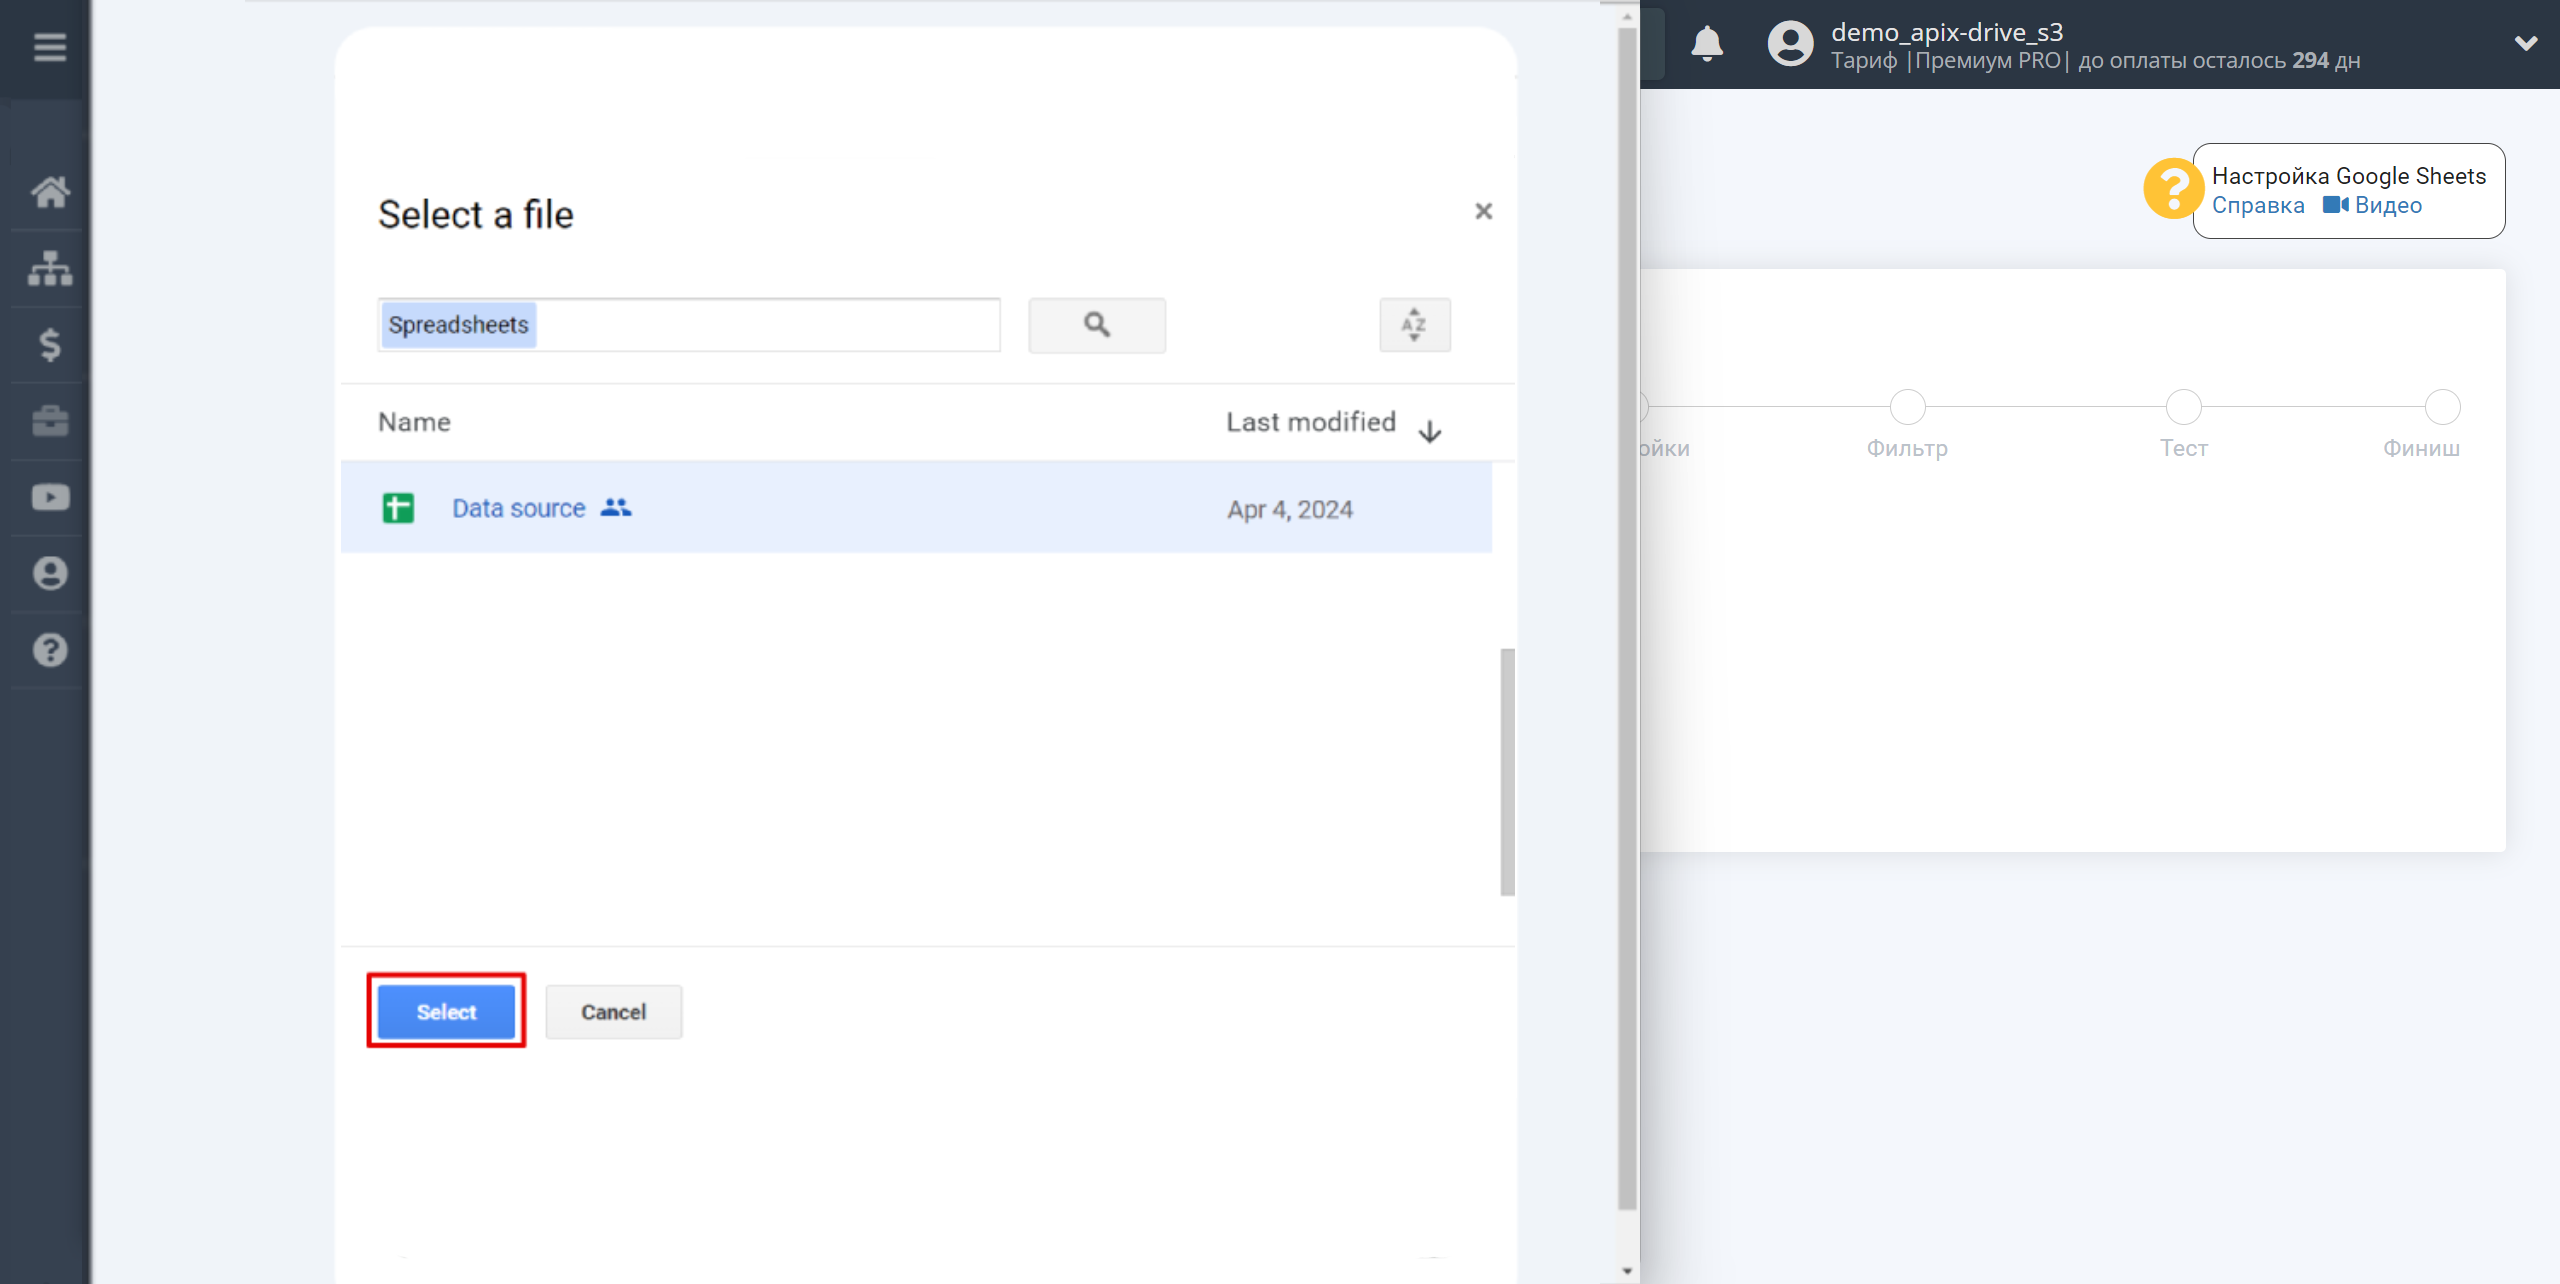 Настройка Поиска Контакта Sendlane в Google Sheets | Подключение аккаунта Источника